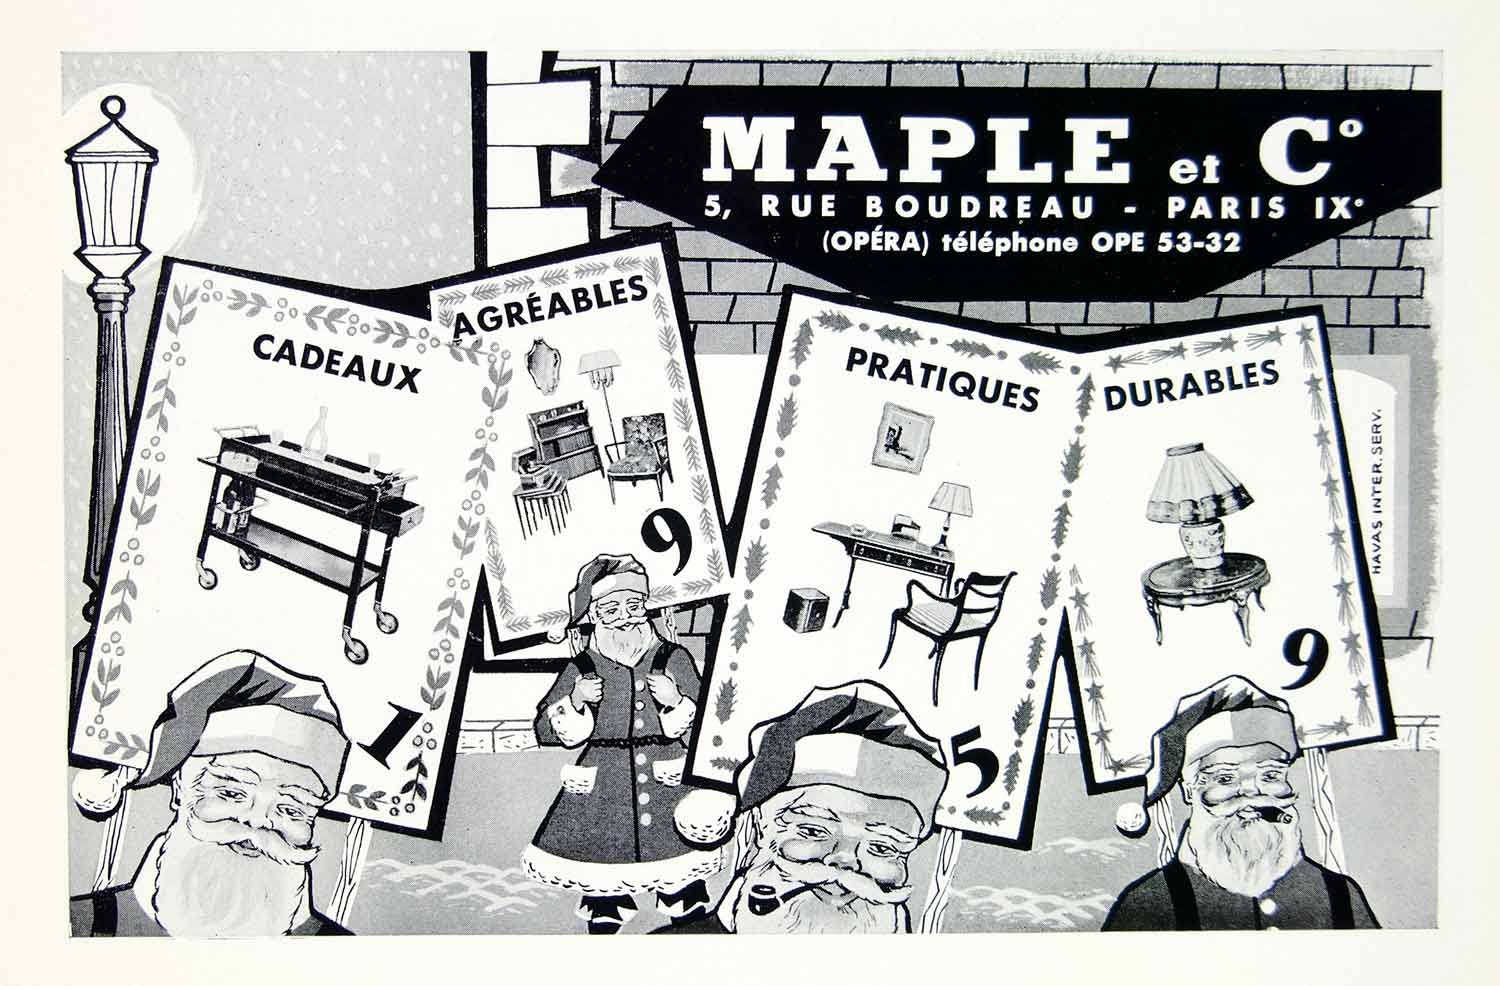 1958 Ad Santa Clause Maple Company Paris France Rue Bourdeau Furniture Gift YPF1